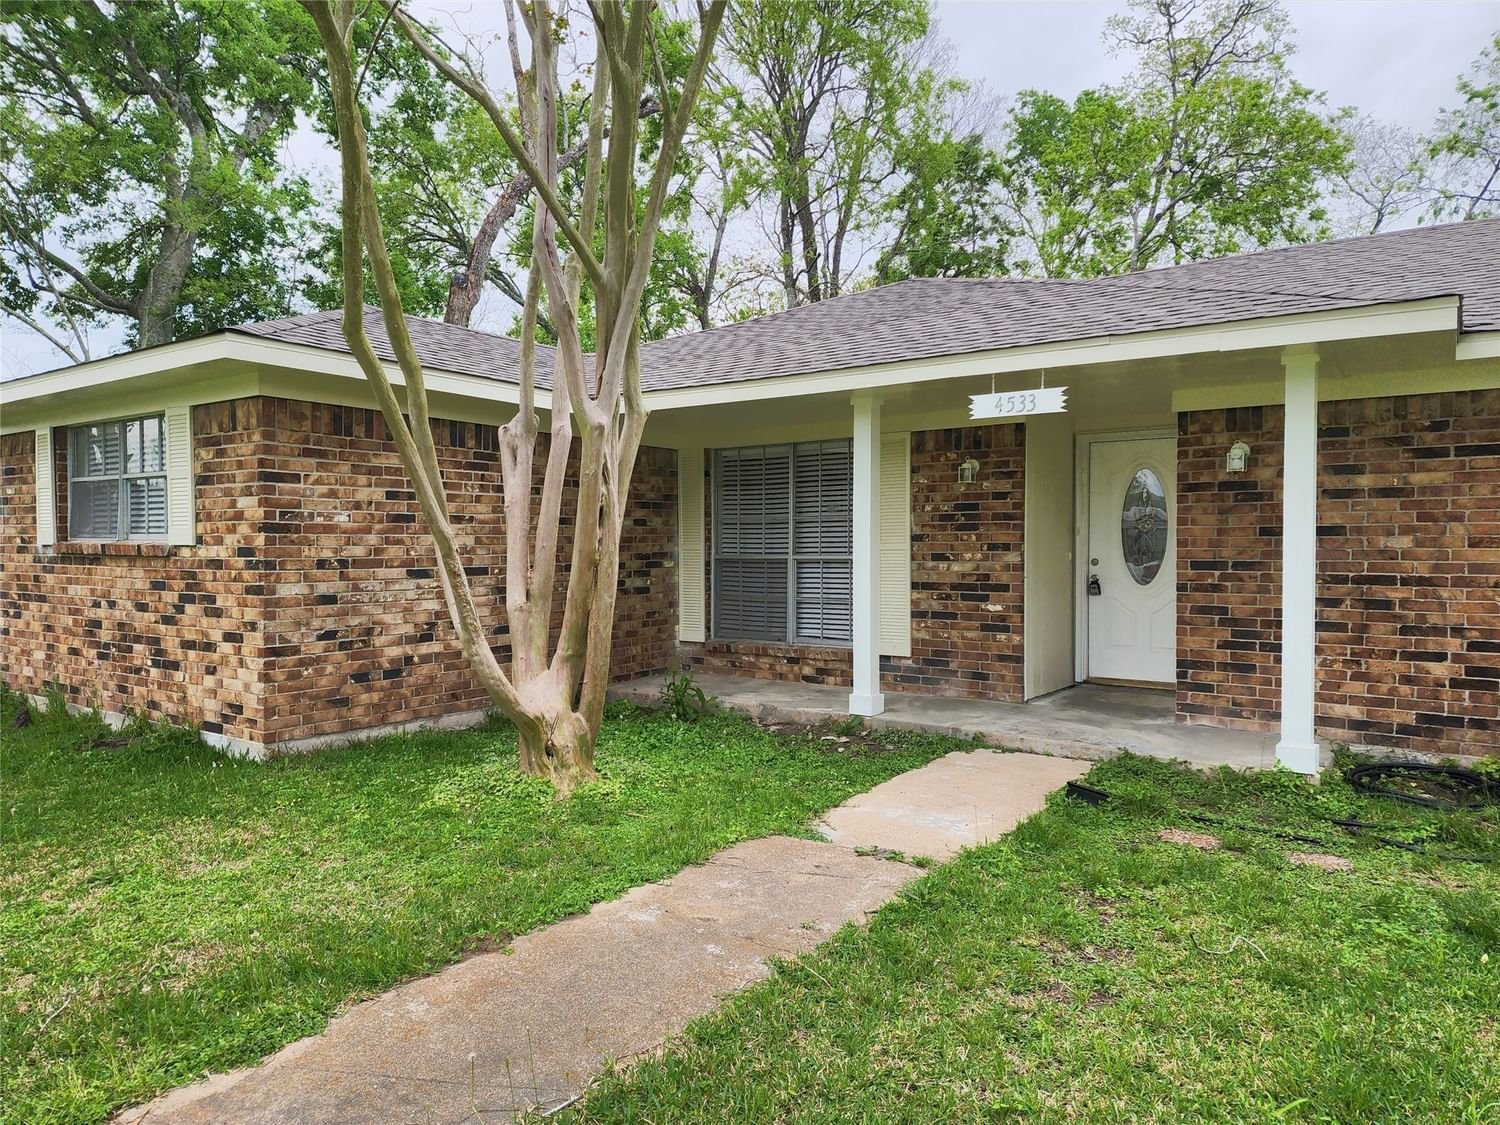 Real estate property located at 4533 29th, Galveston, Nicholstone, Dickinson, TX, US